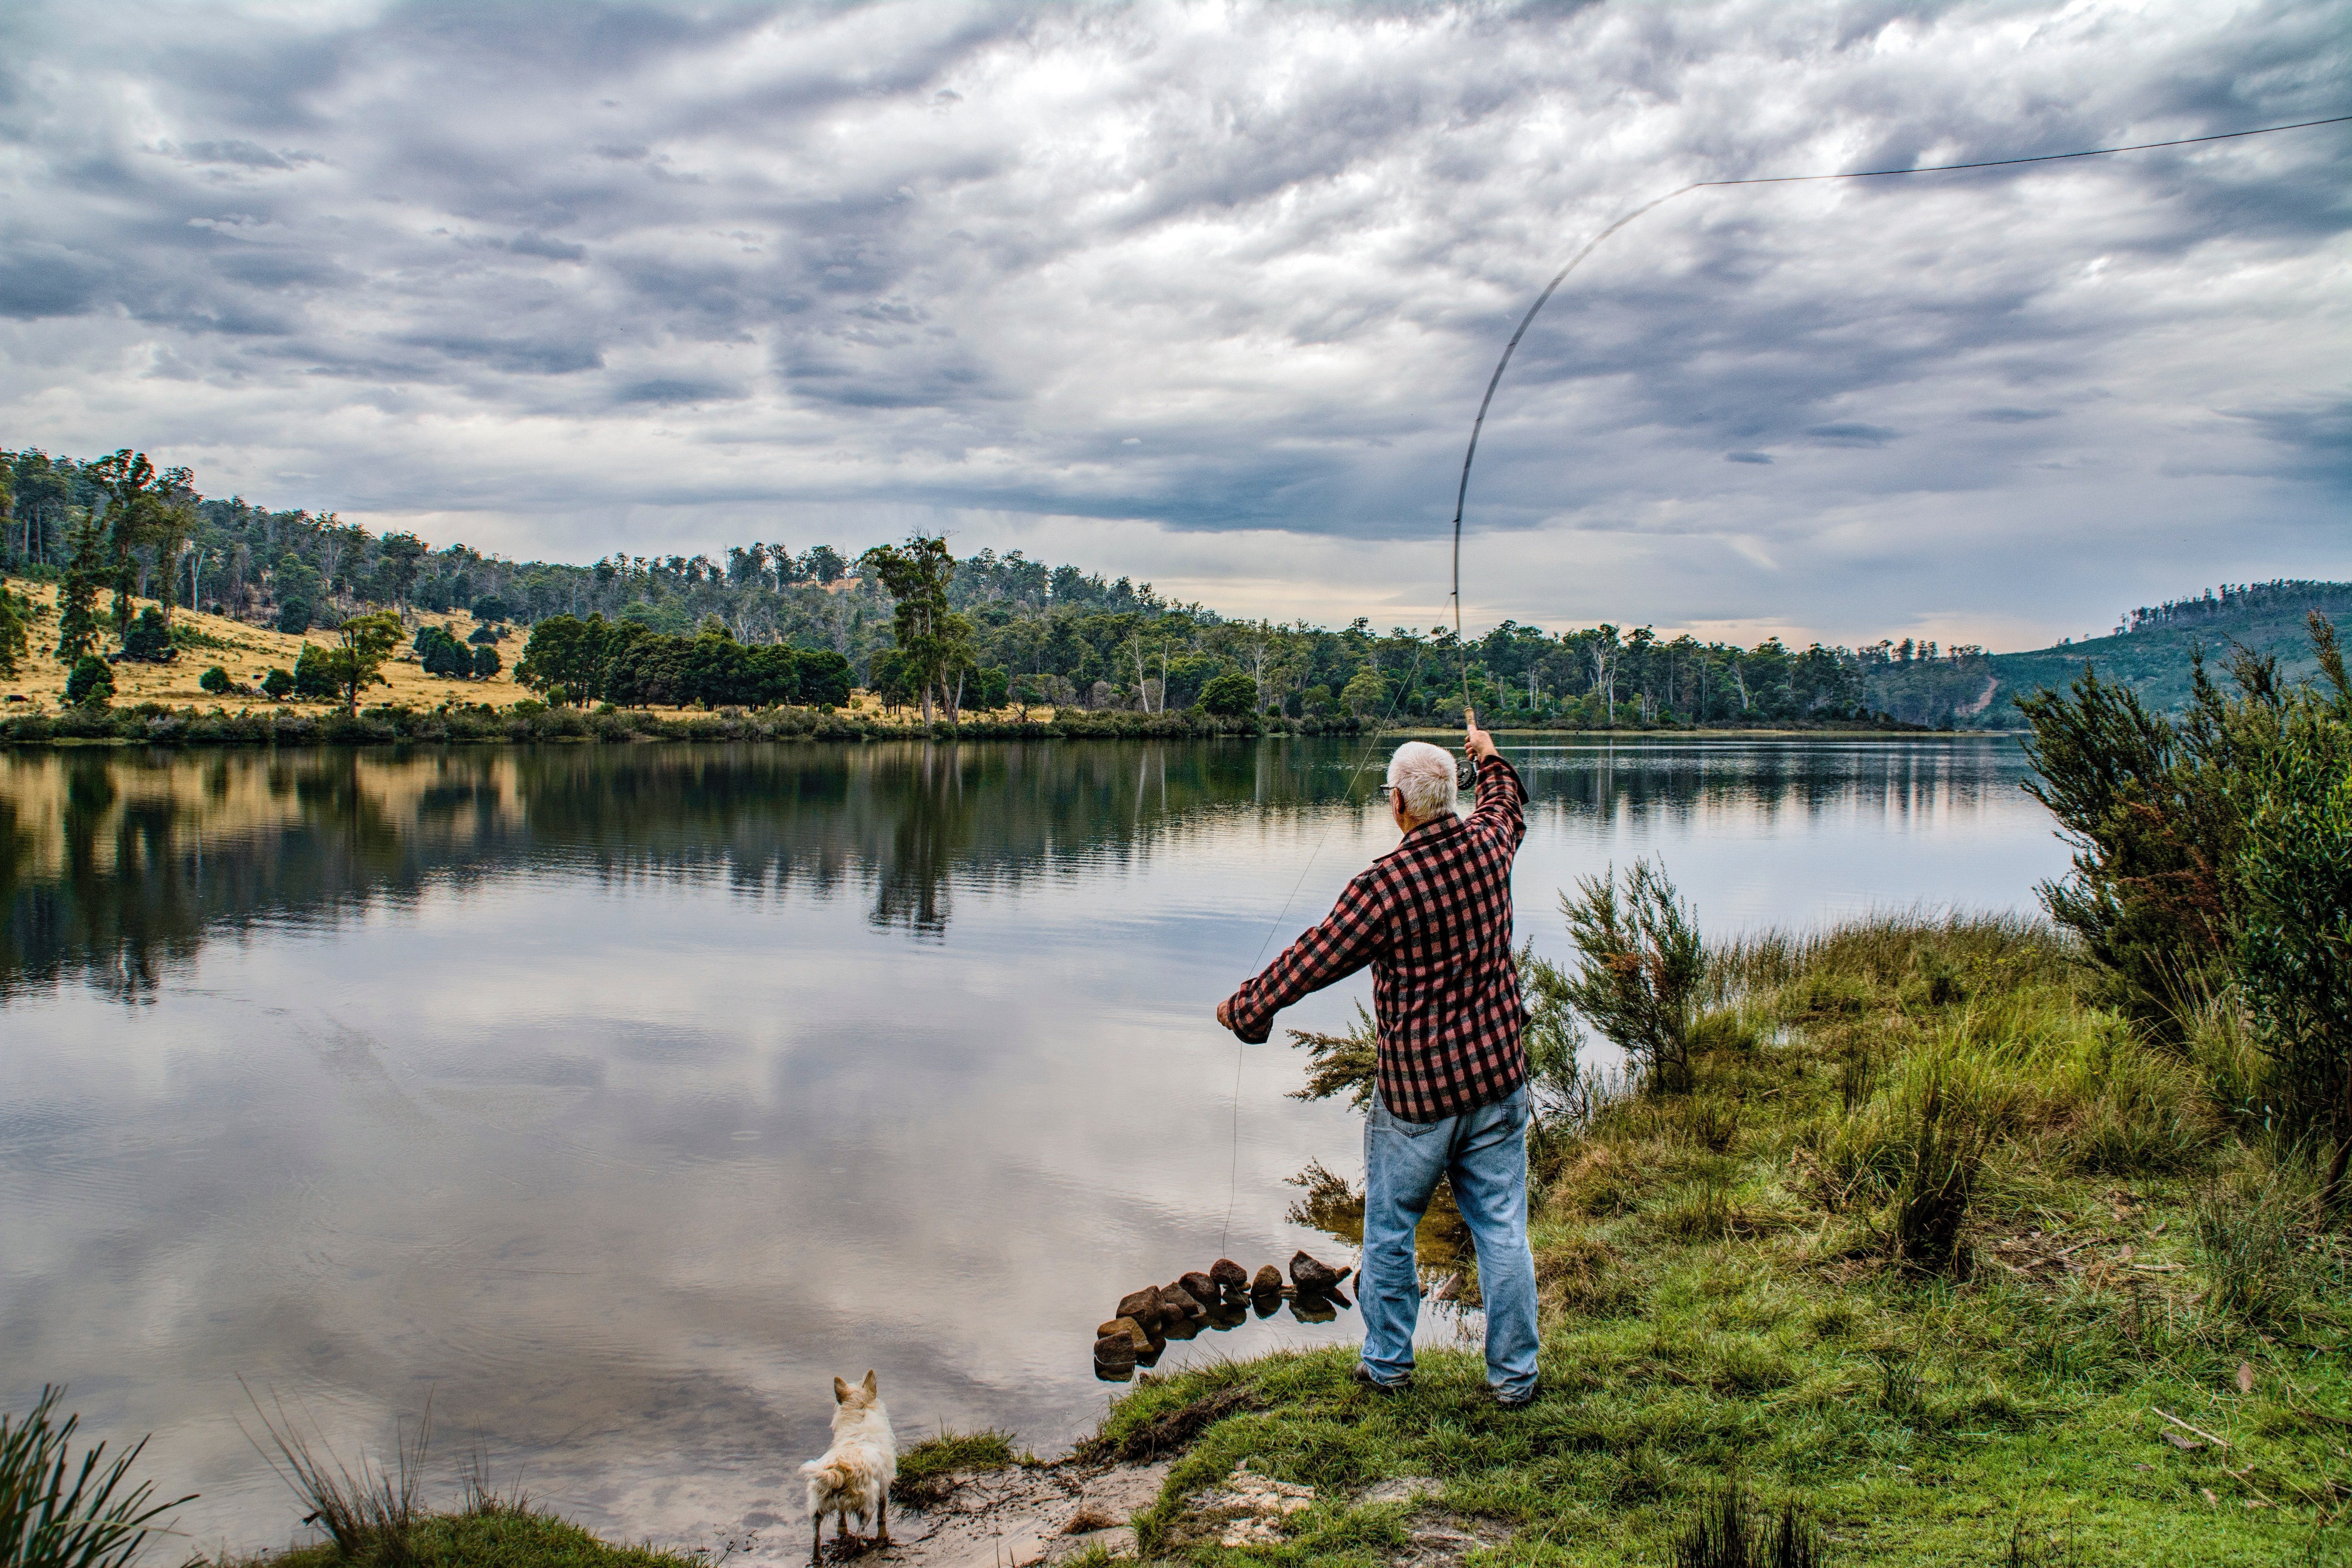 Man fishing at a lake. | Source: Pexels